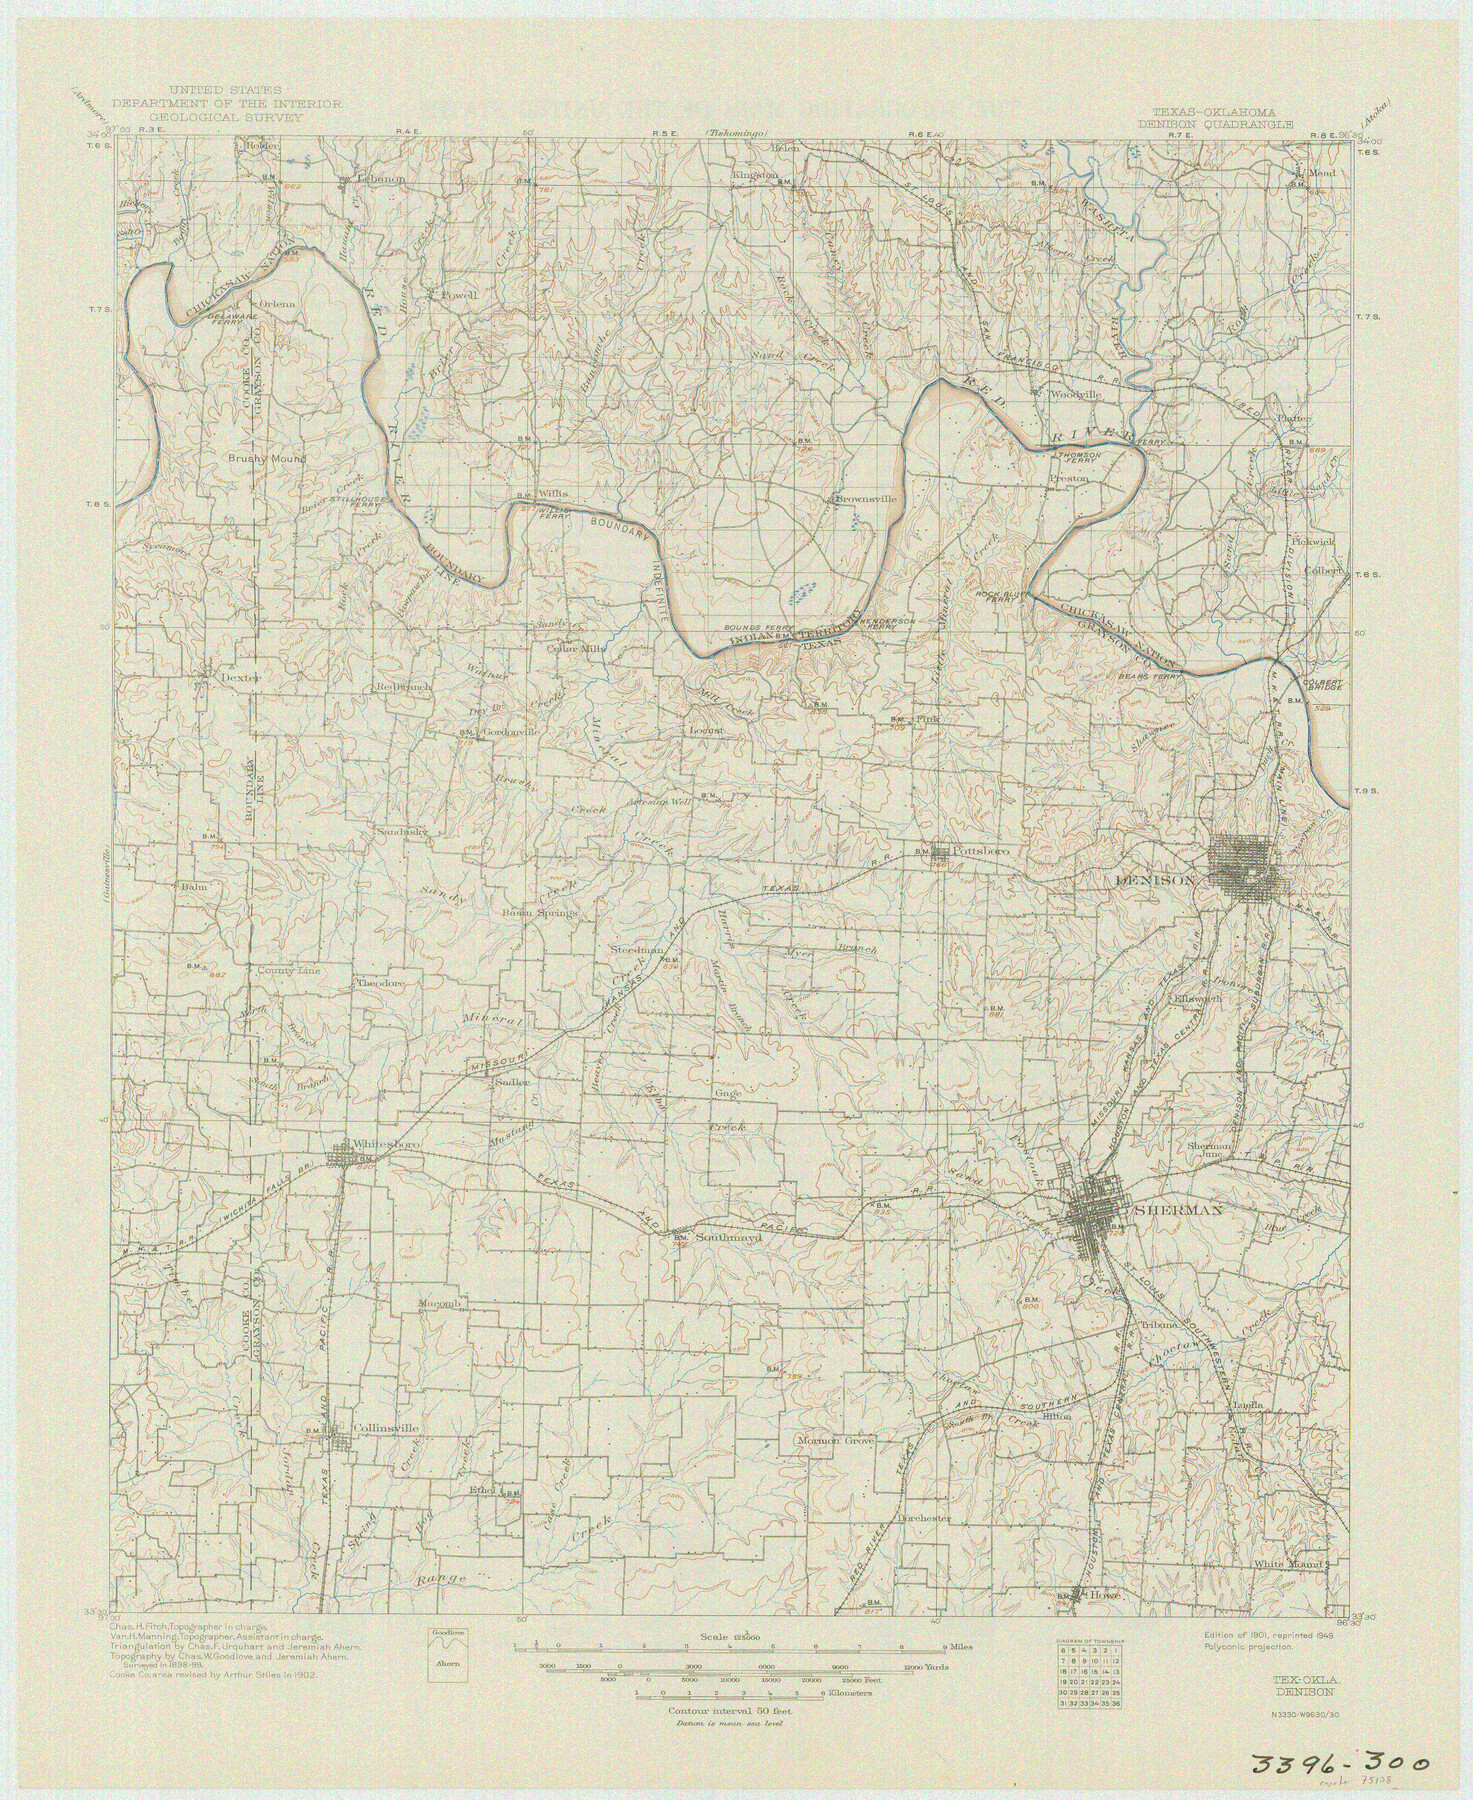 75108, USGS Topographic: Texas-Oklahoma Denison Quadrangle, General Map Collection